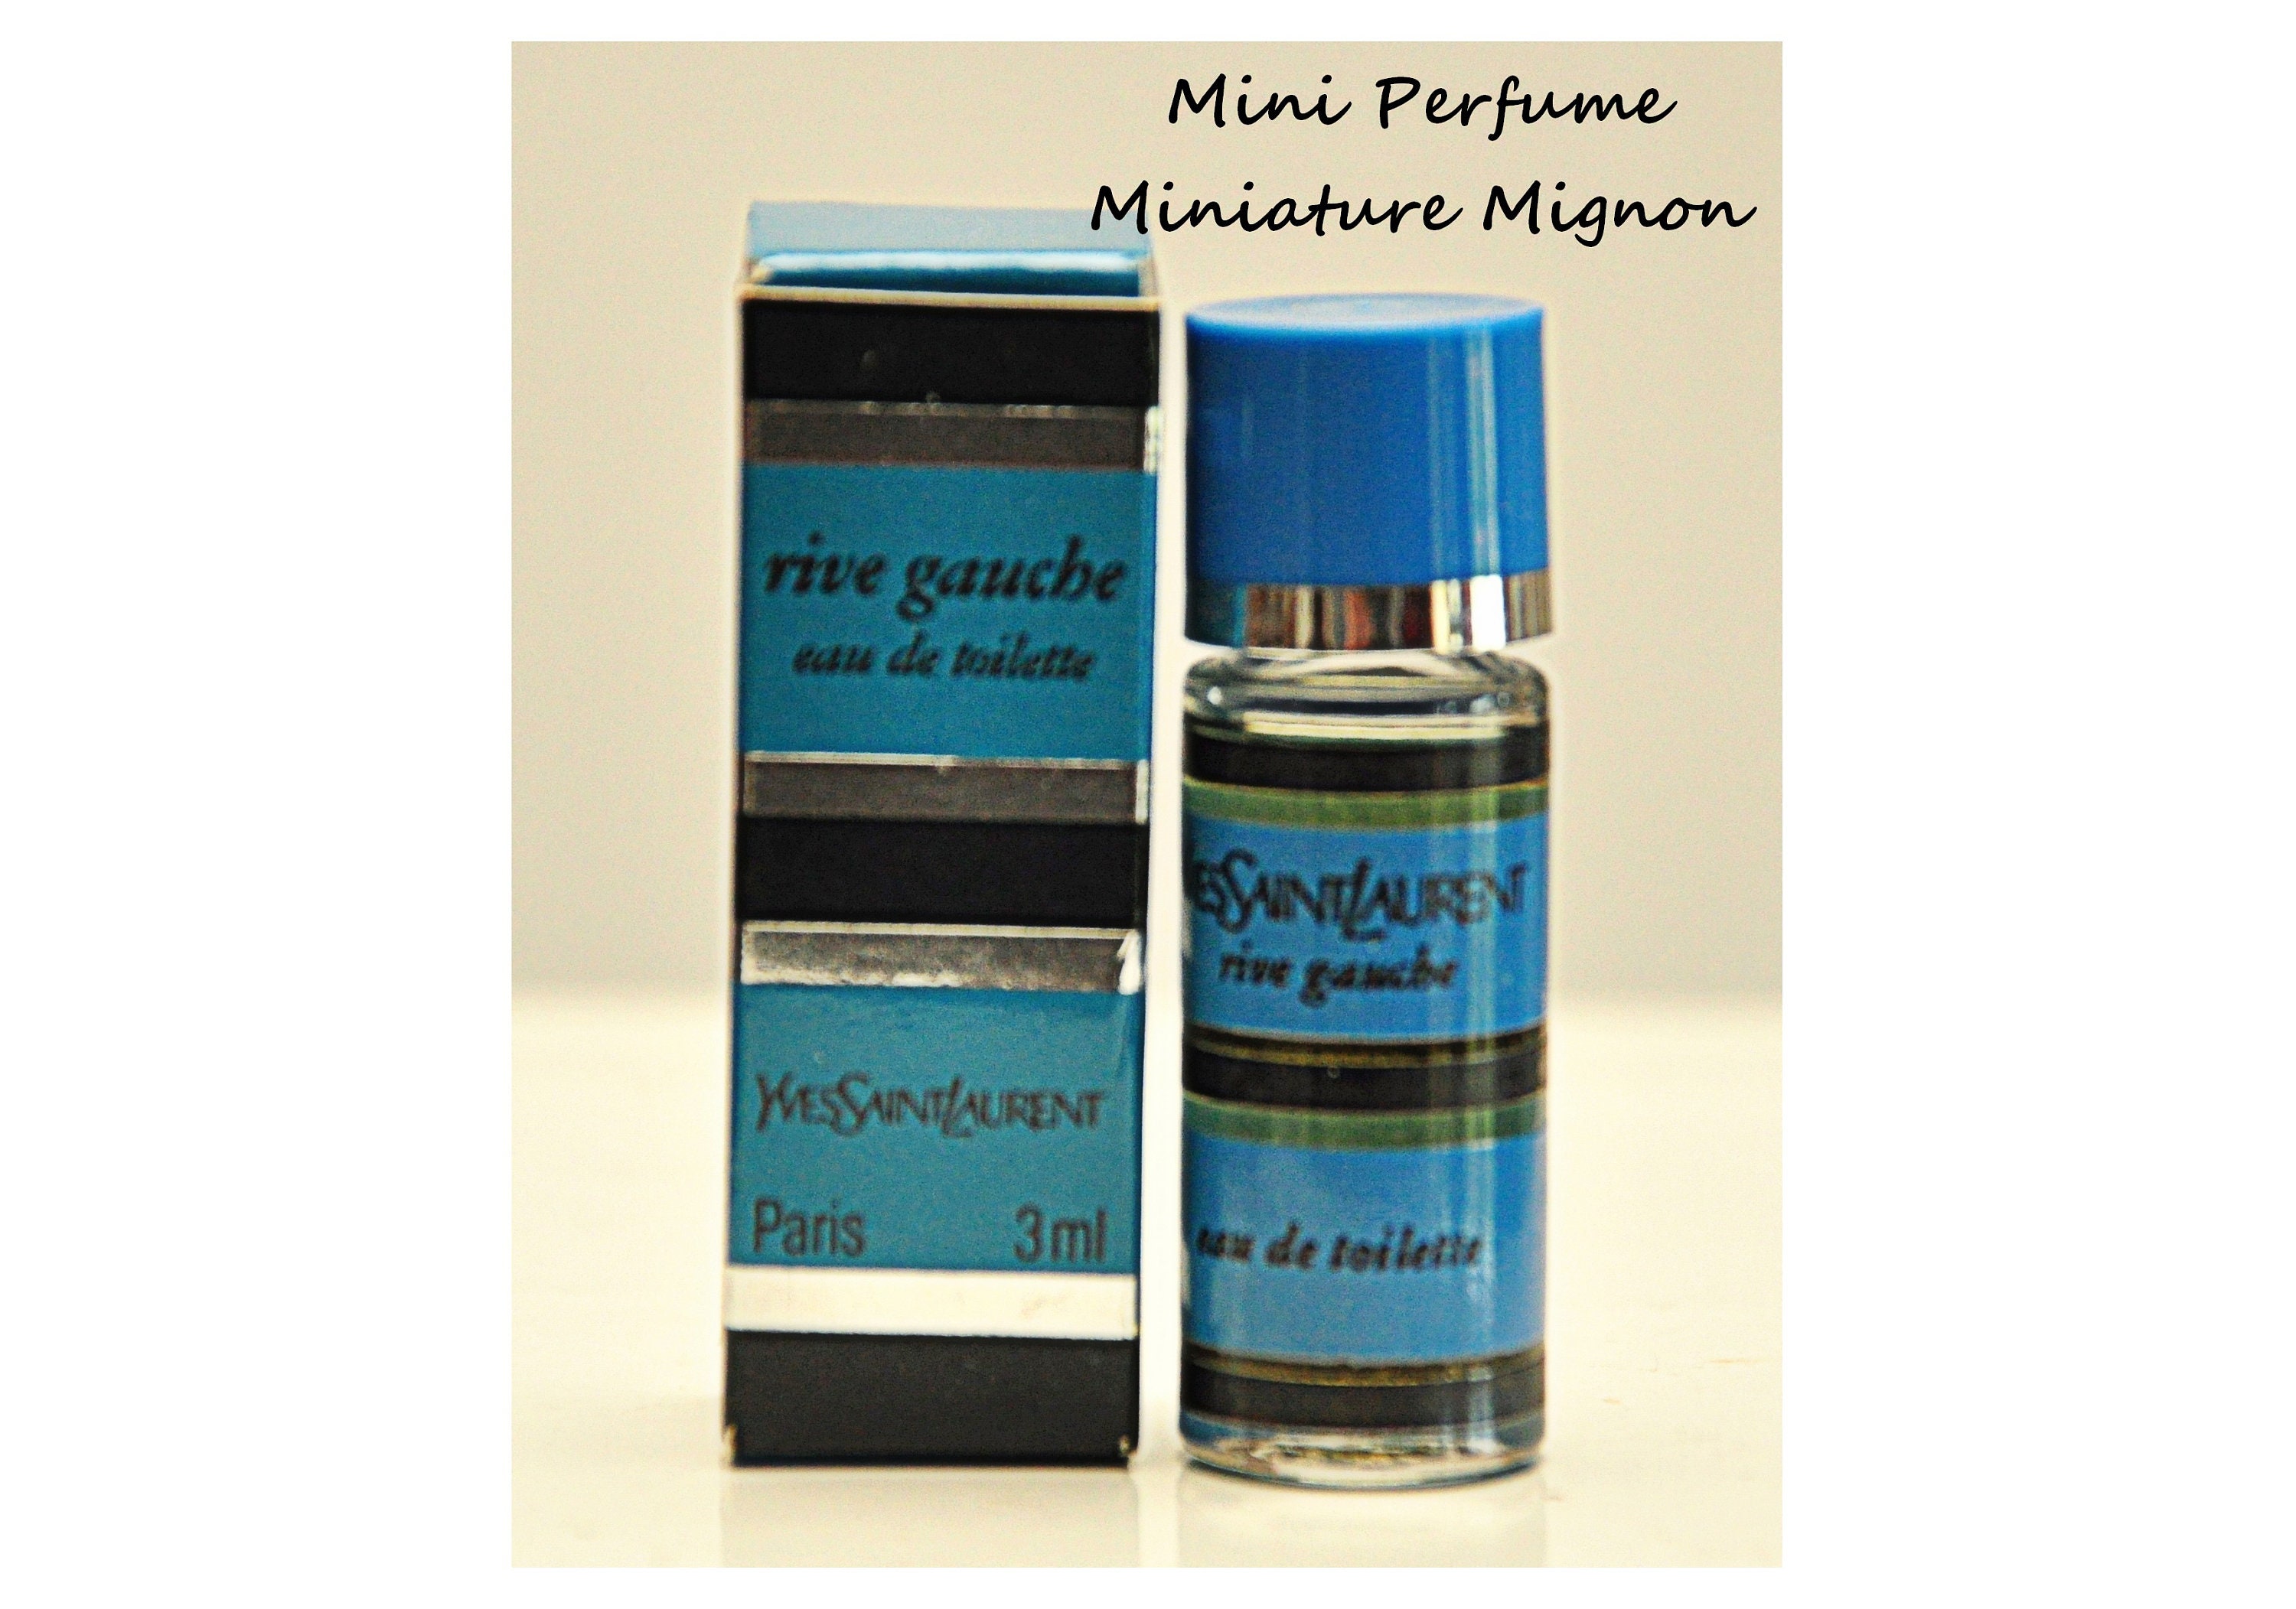 Yves Saint Laurent Rive Gauche .5 fl oz Parfum Splash (new)